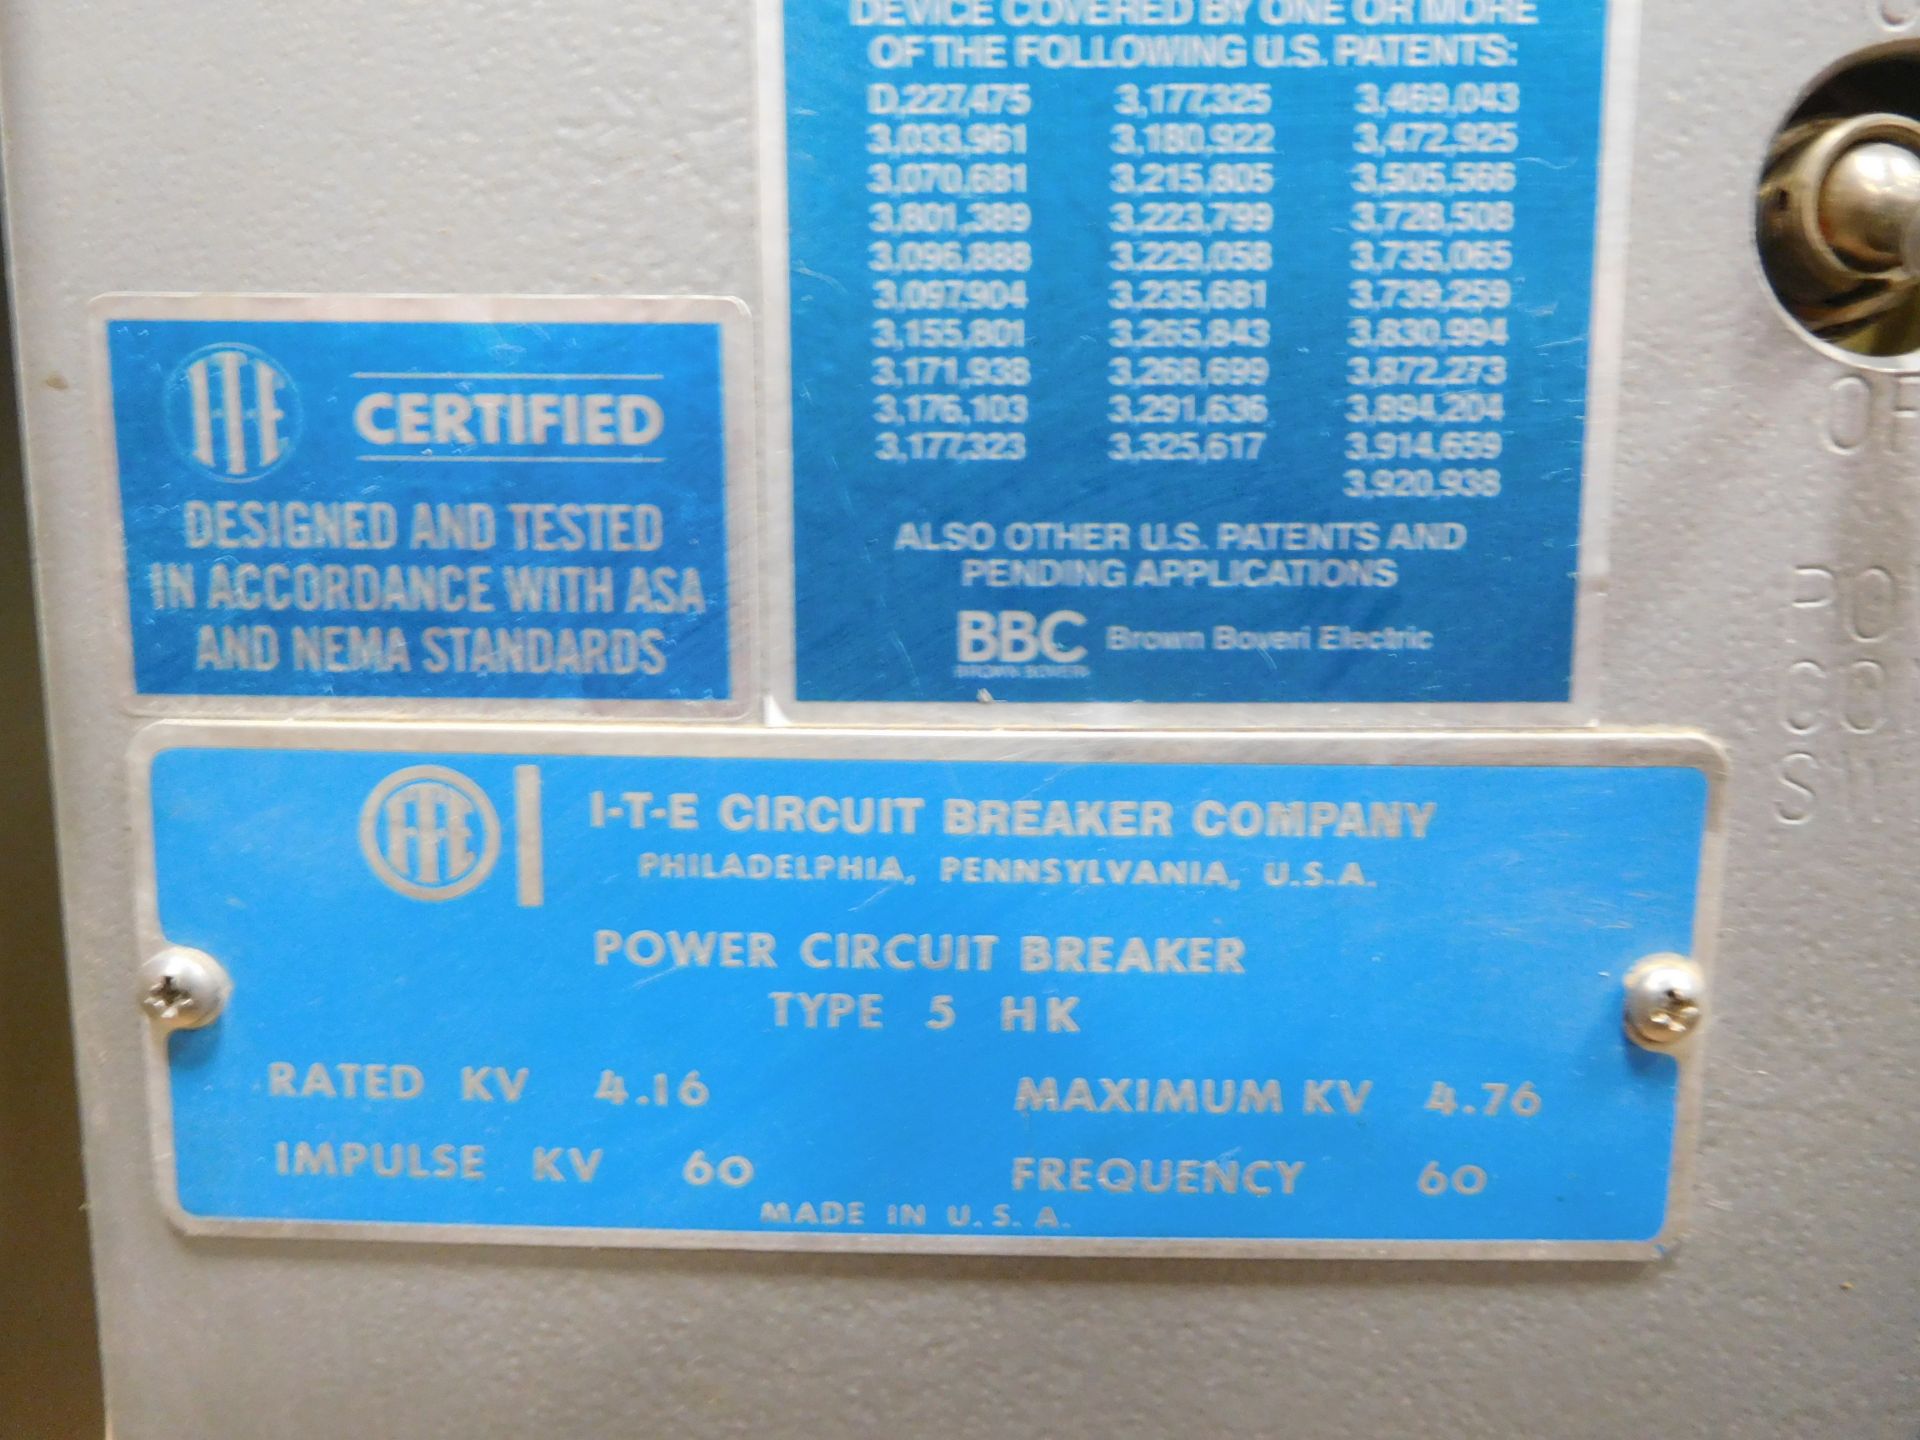 BBC I-T-E 5 HK 1200 Amp Power Circuit Breaker - Image 3 of 11